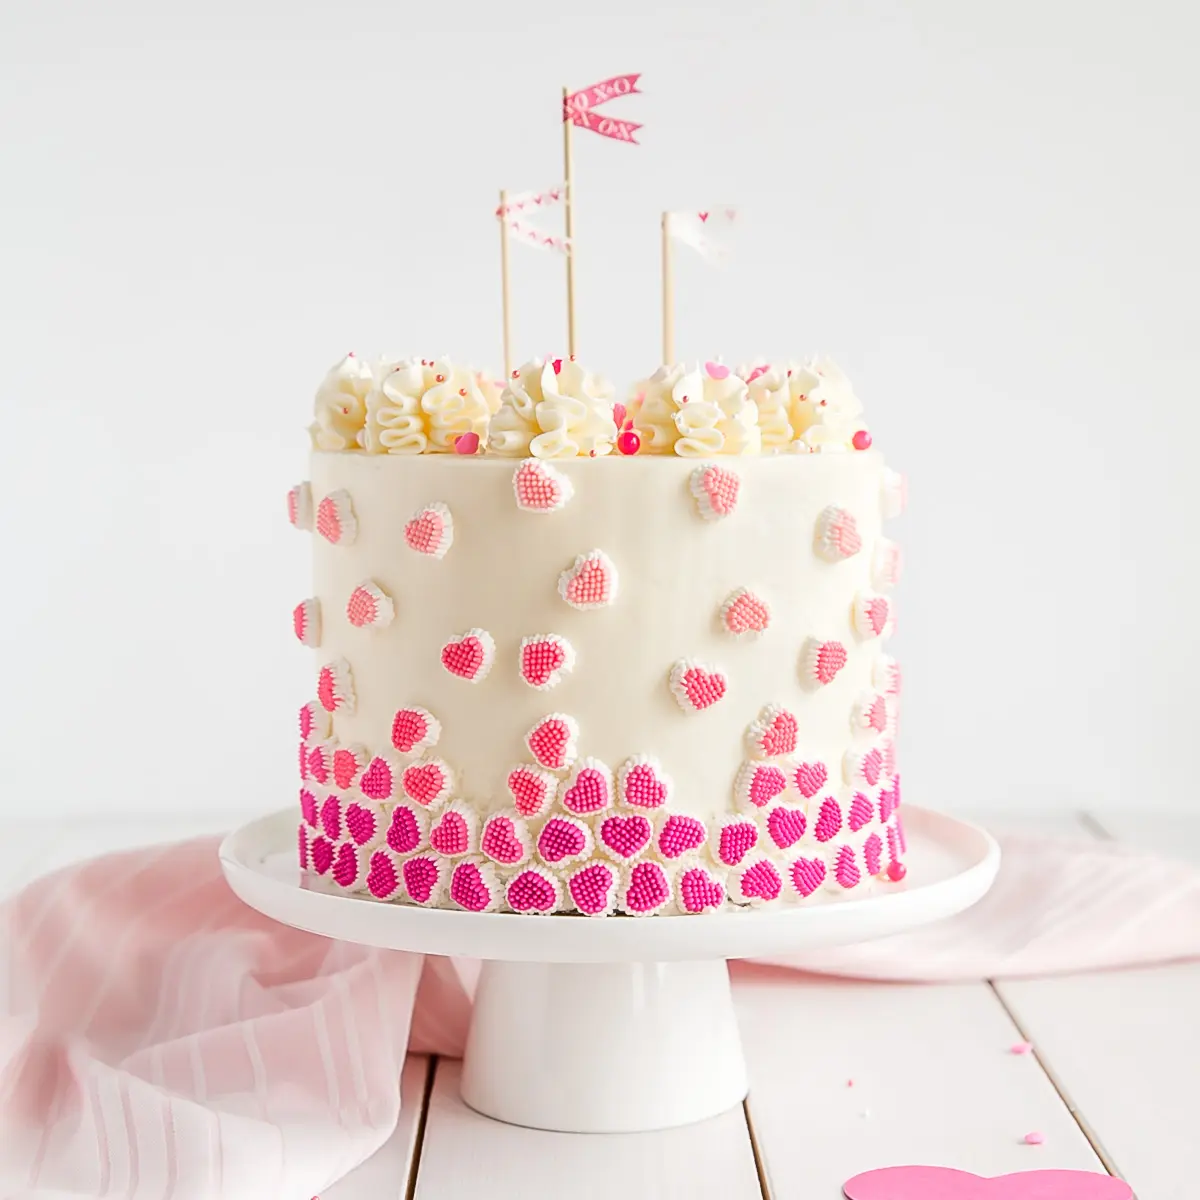 Buy/Send Beauty In Pink Chocolate Cake- 1 Kg Online- FNP